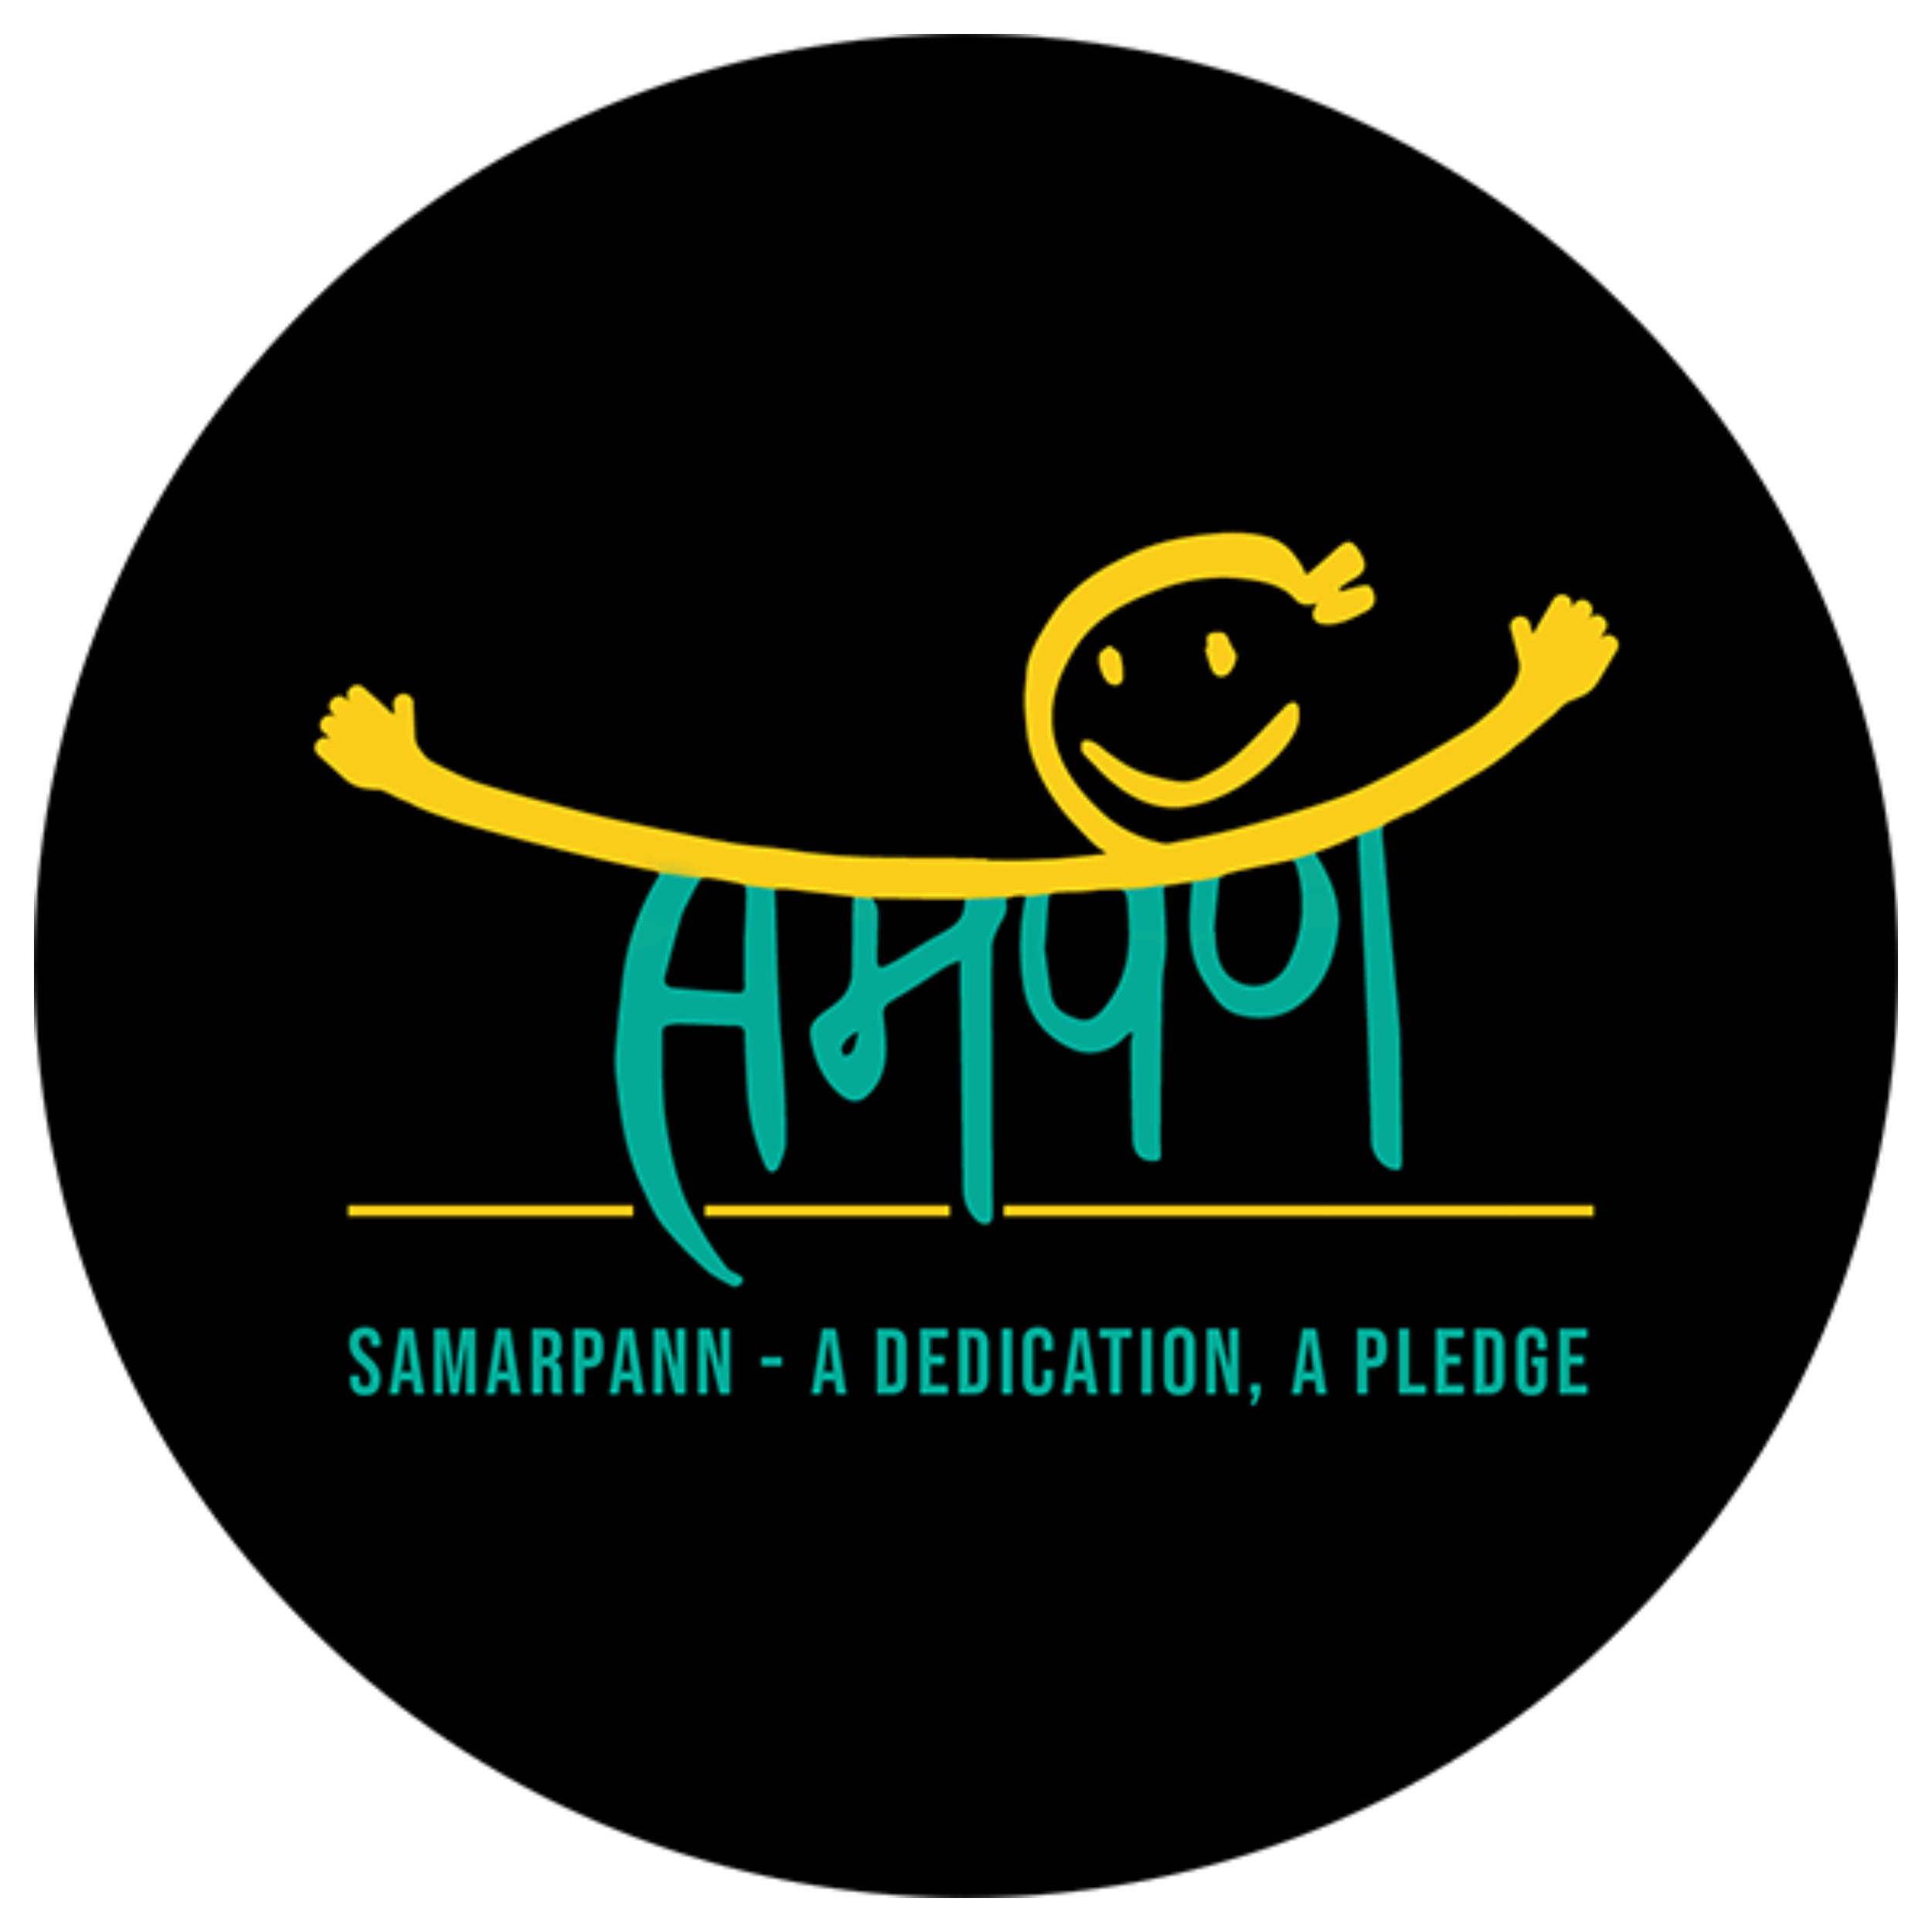 Samarpann logo